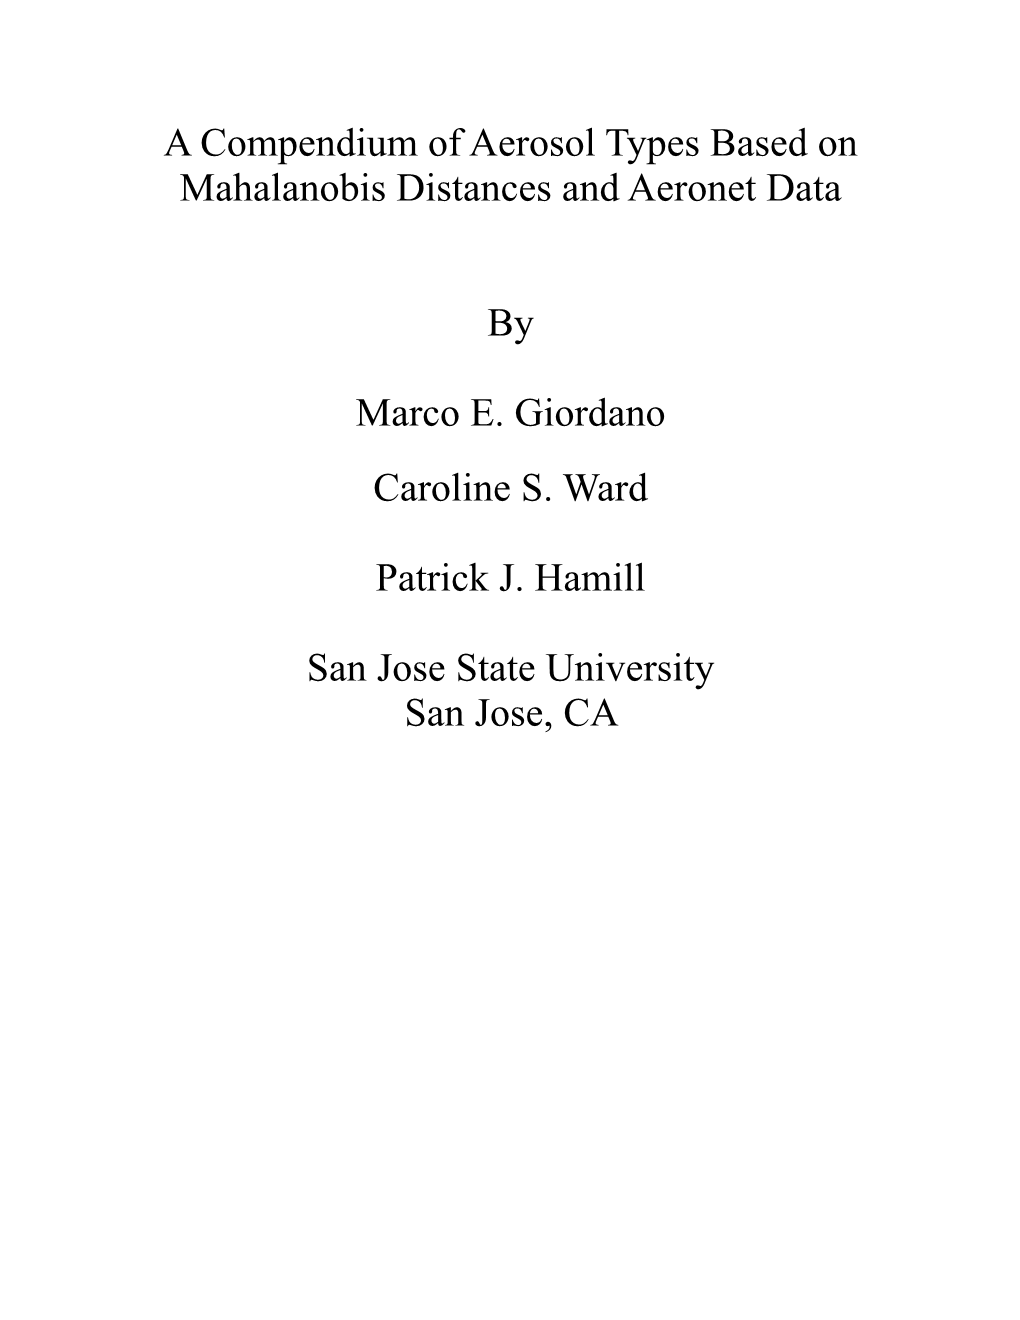 A Compendium of Aerosol Types Based on Mahalanobis Distances and Aeronet Data